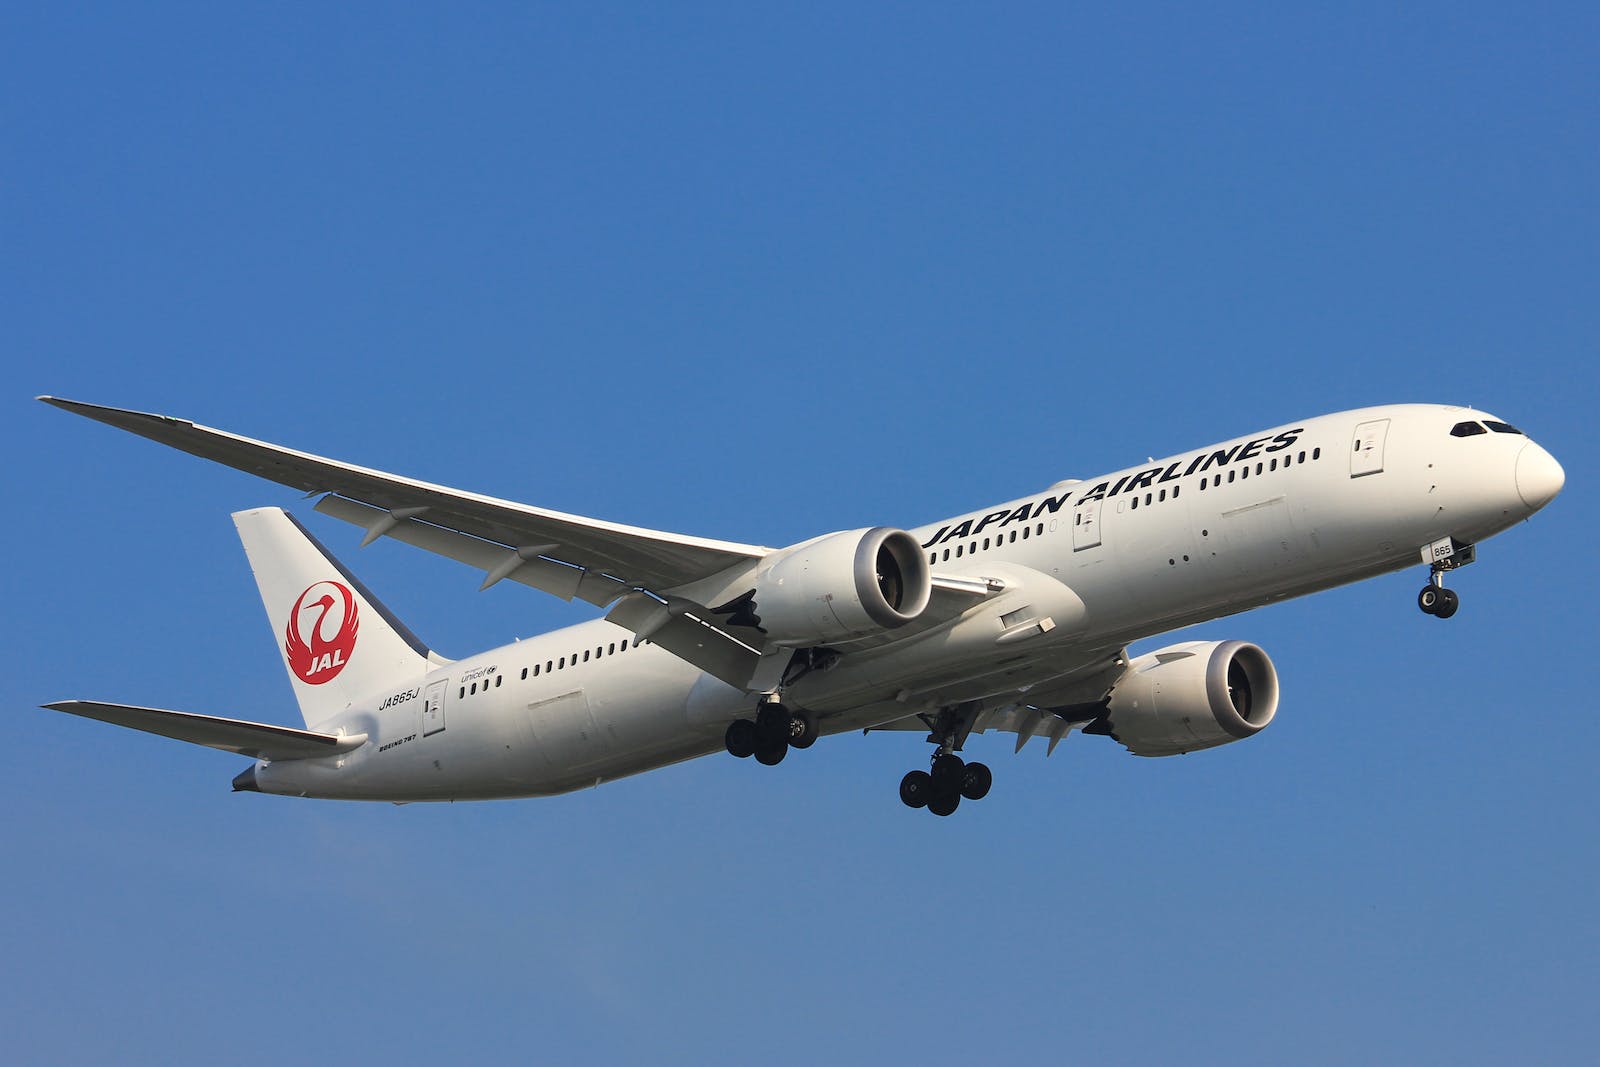 Japan Airlines' Passenger Plane